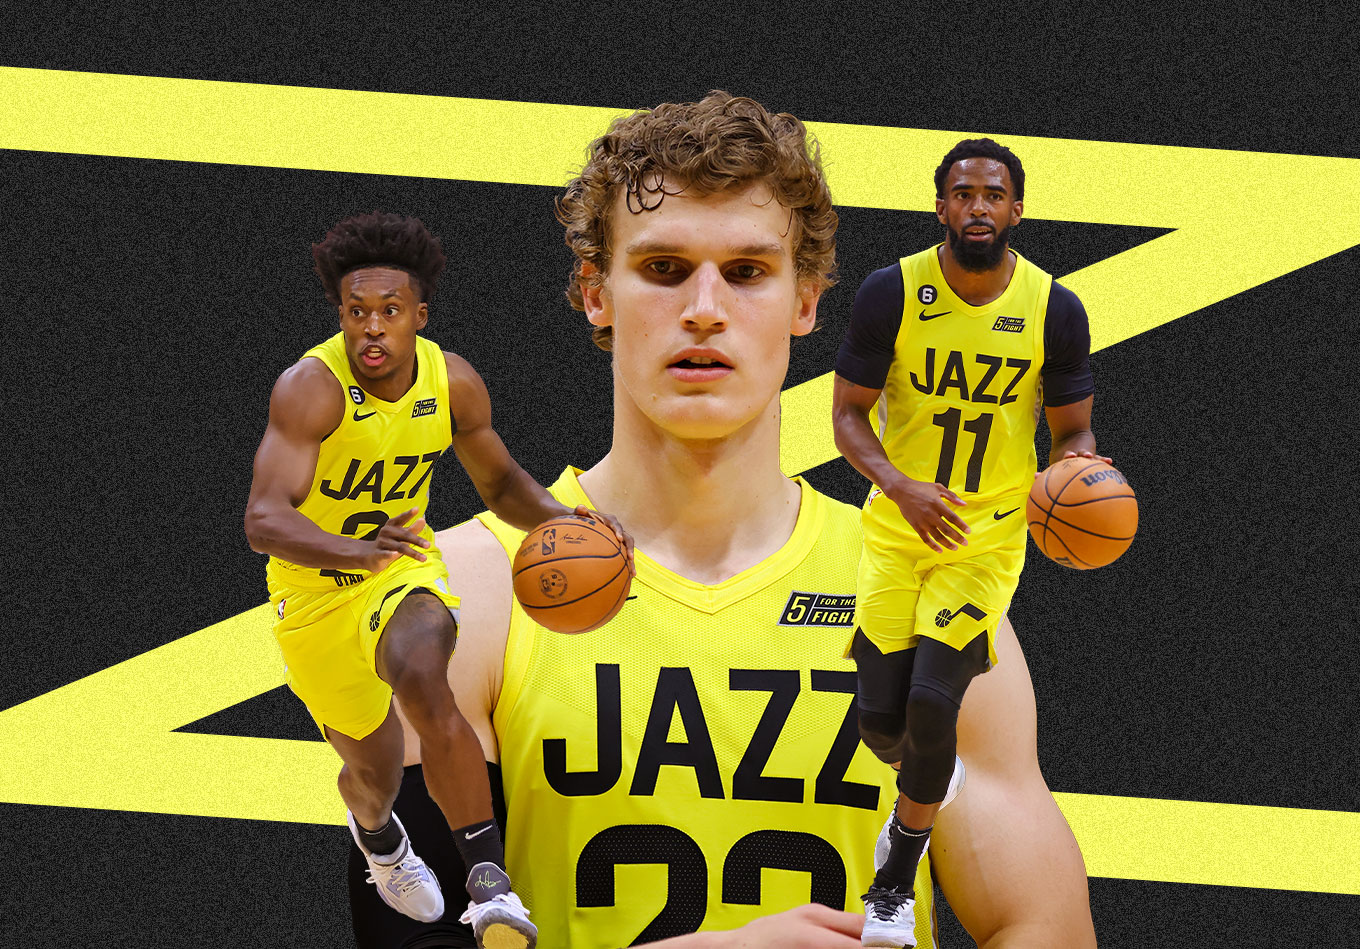 jazz basketball players